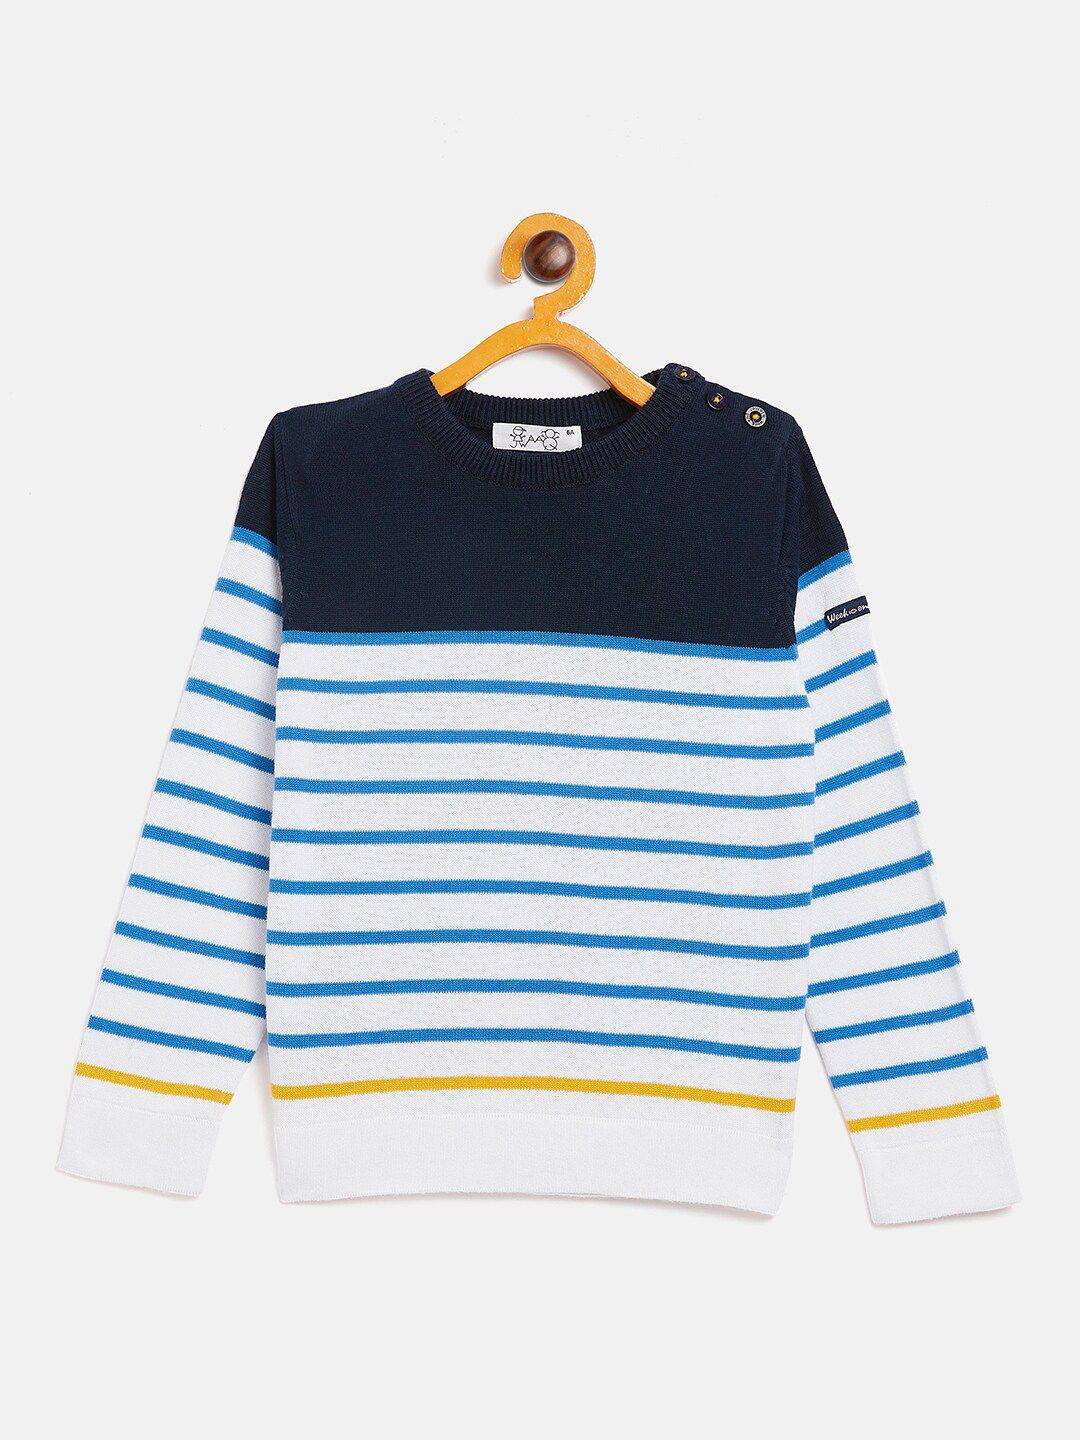 jwaaq unisex kids navy blue & black striped pullover